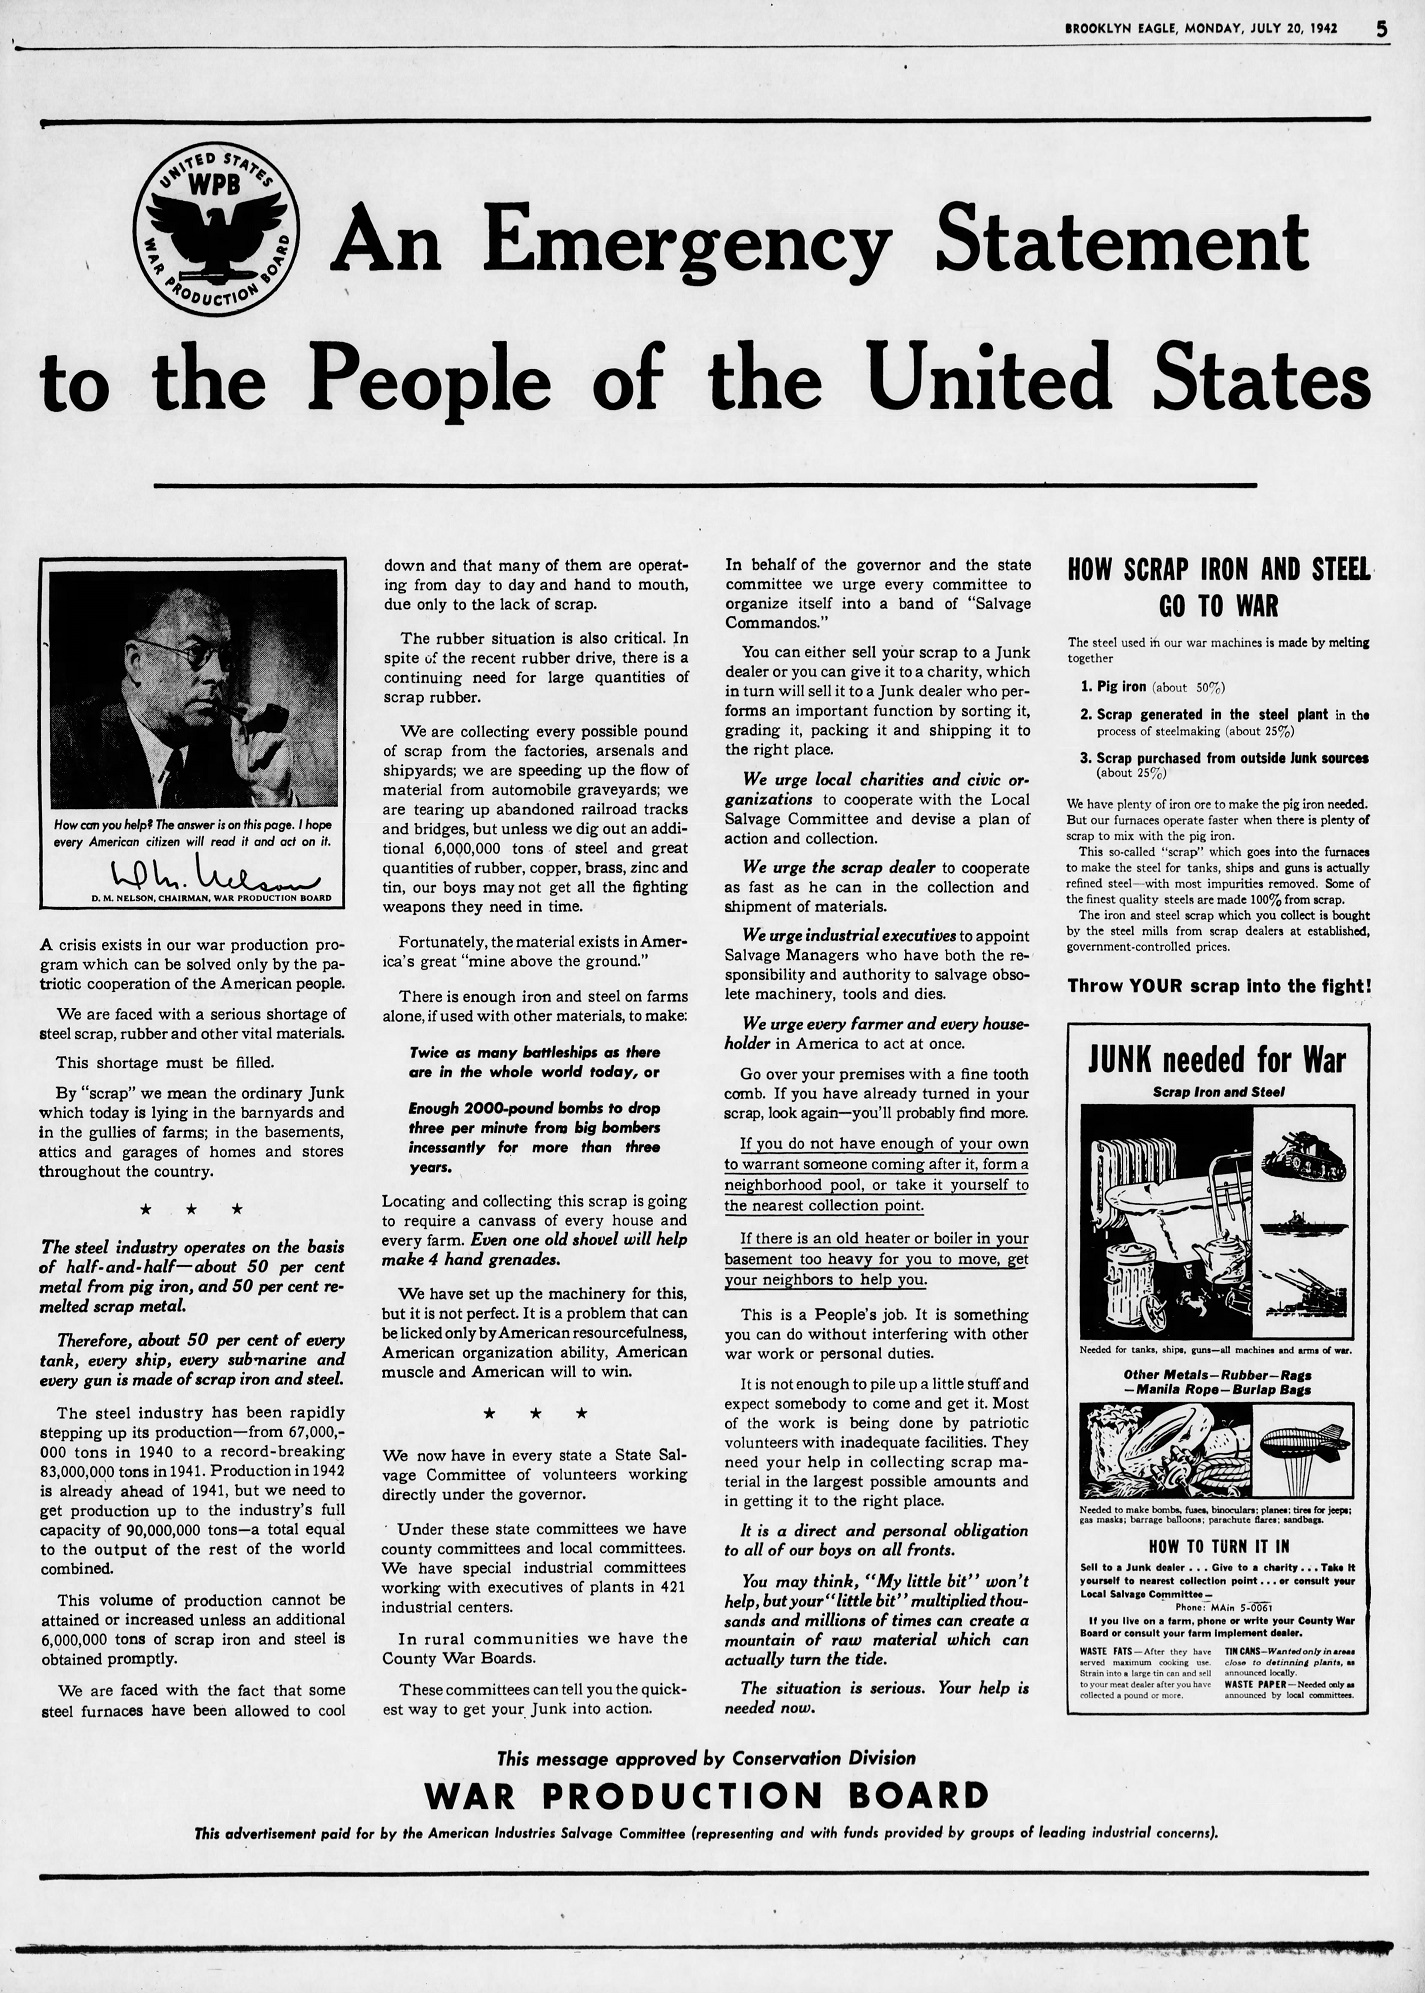 The_Brooklyn_Daily_Eagle_Mon__Jul_20__1942_(3).jpg